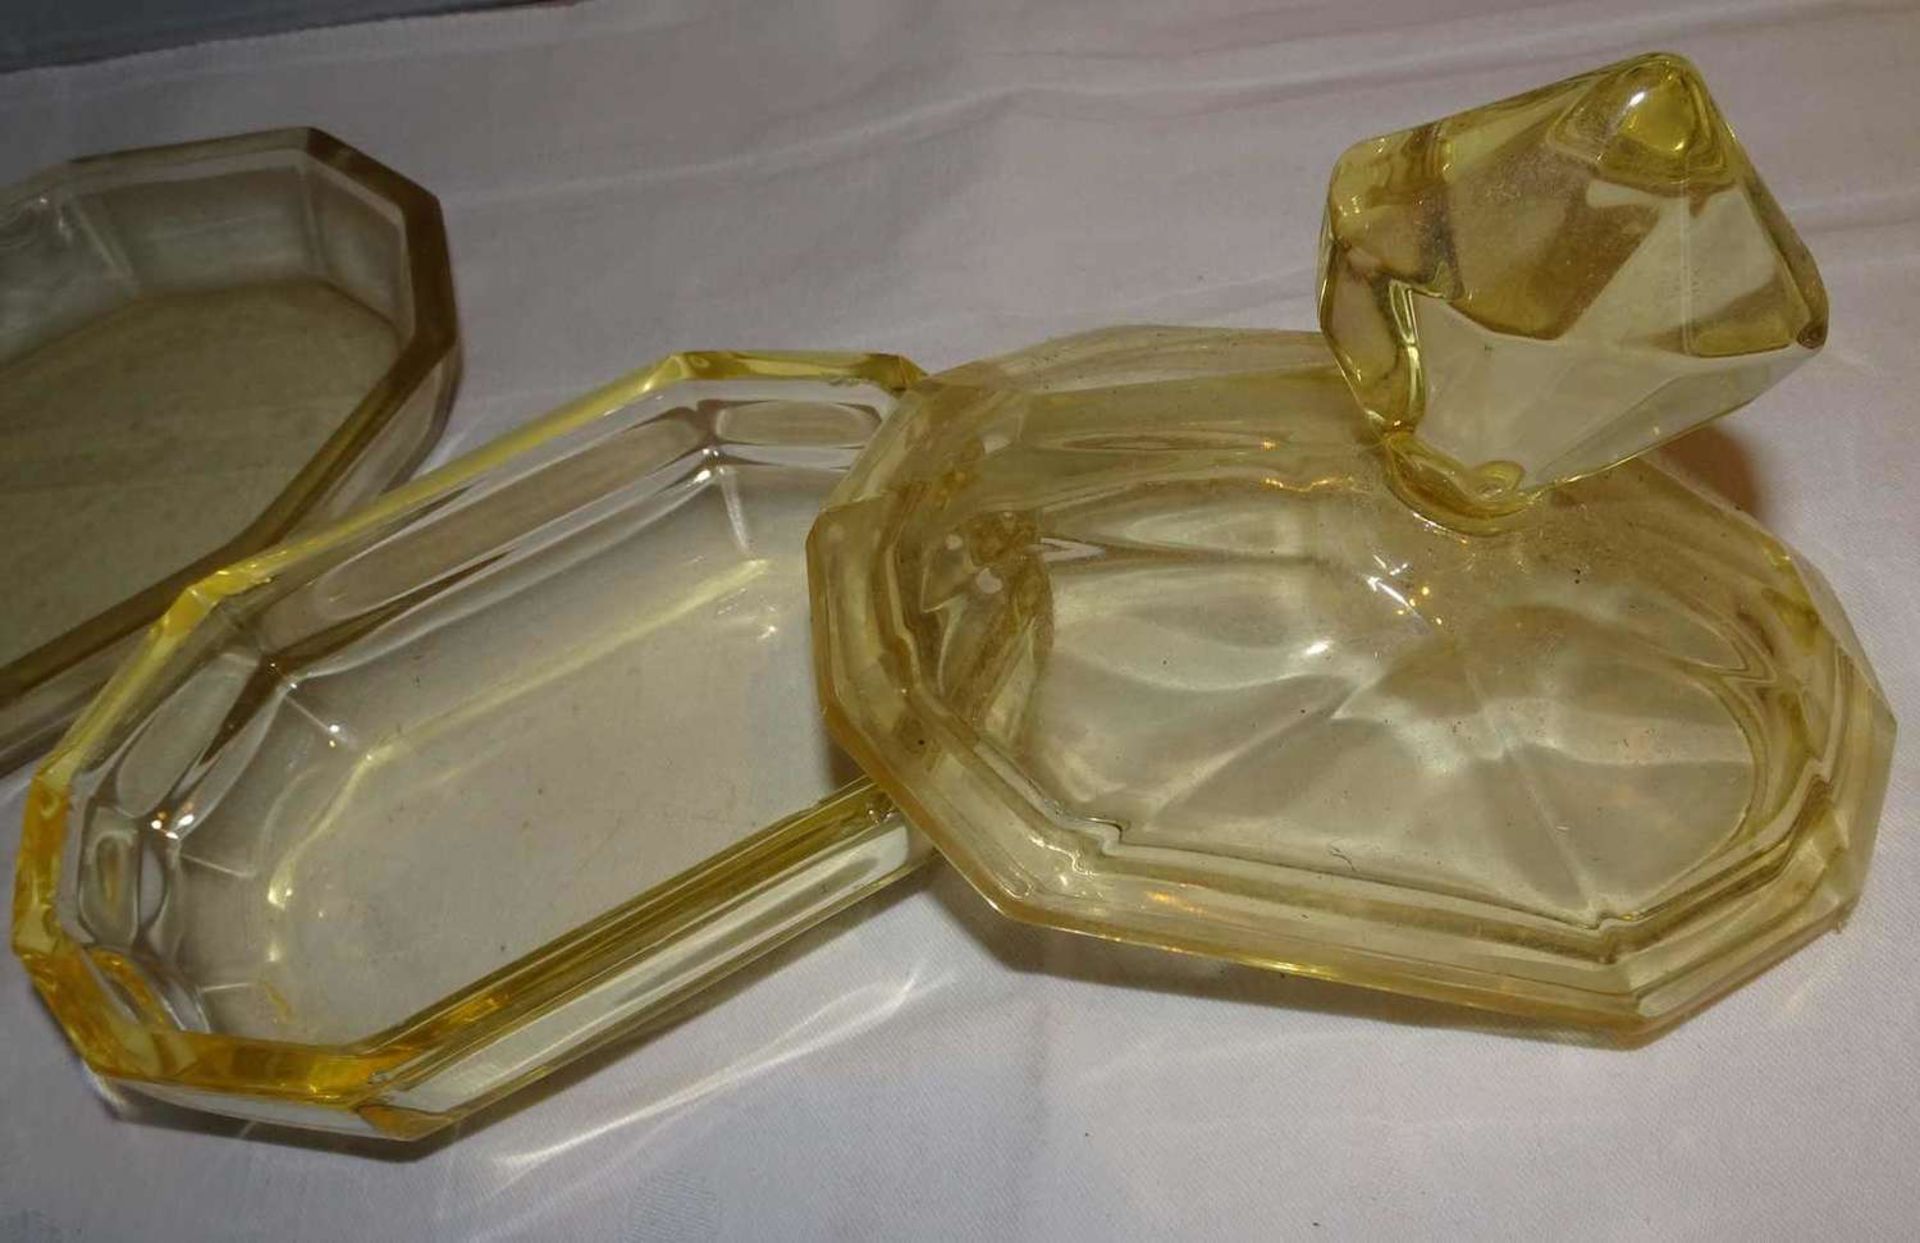 Kristall Parfumflakon Set, bestehend aus 2 Flakons, 1 Glasdeckeldose, sowie 1 Schale. Farbe: Gelbto - Image 2 of 2